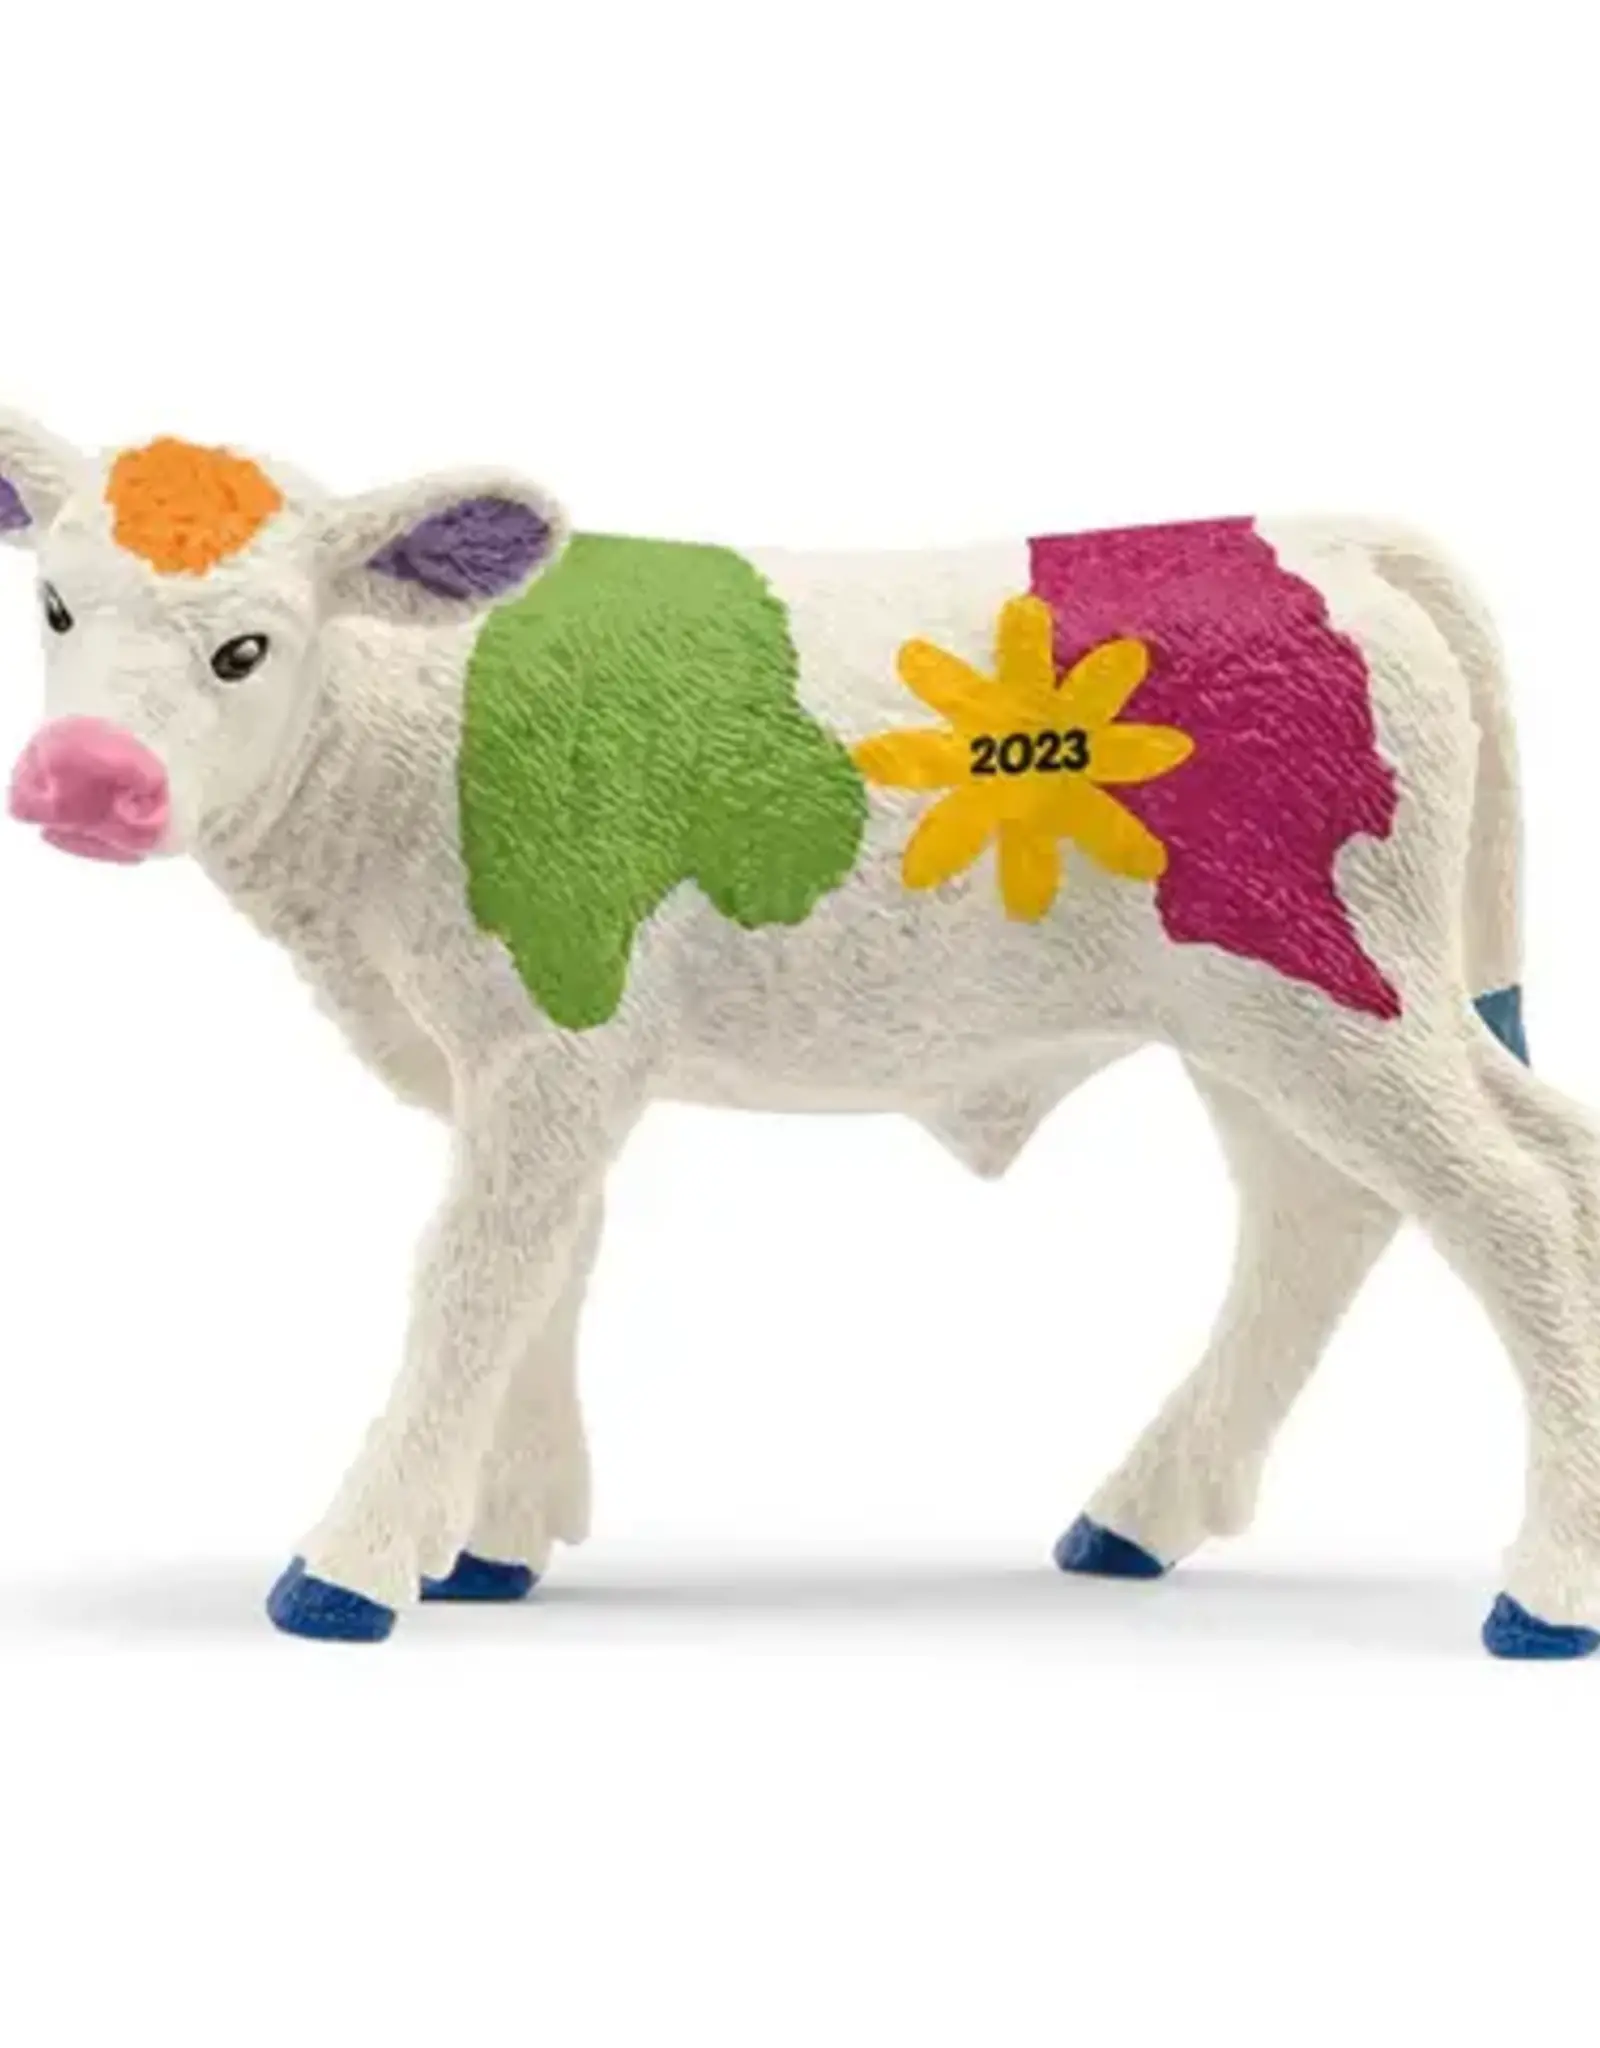 Schleich Colourful Spring Calf